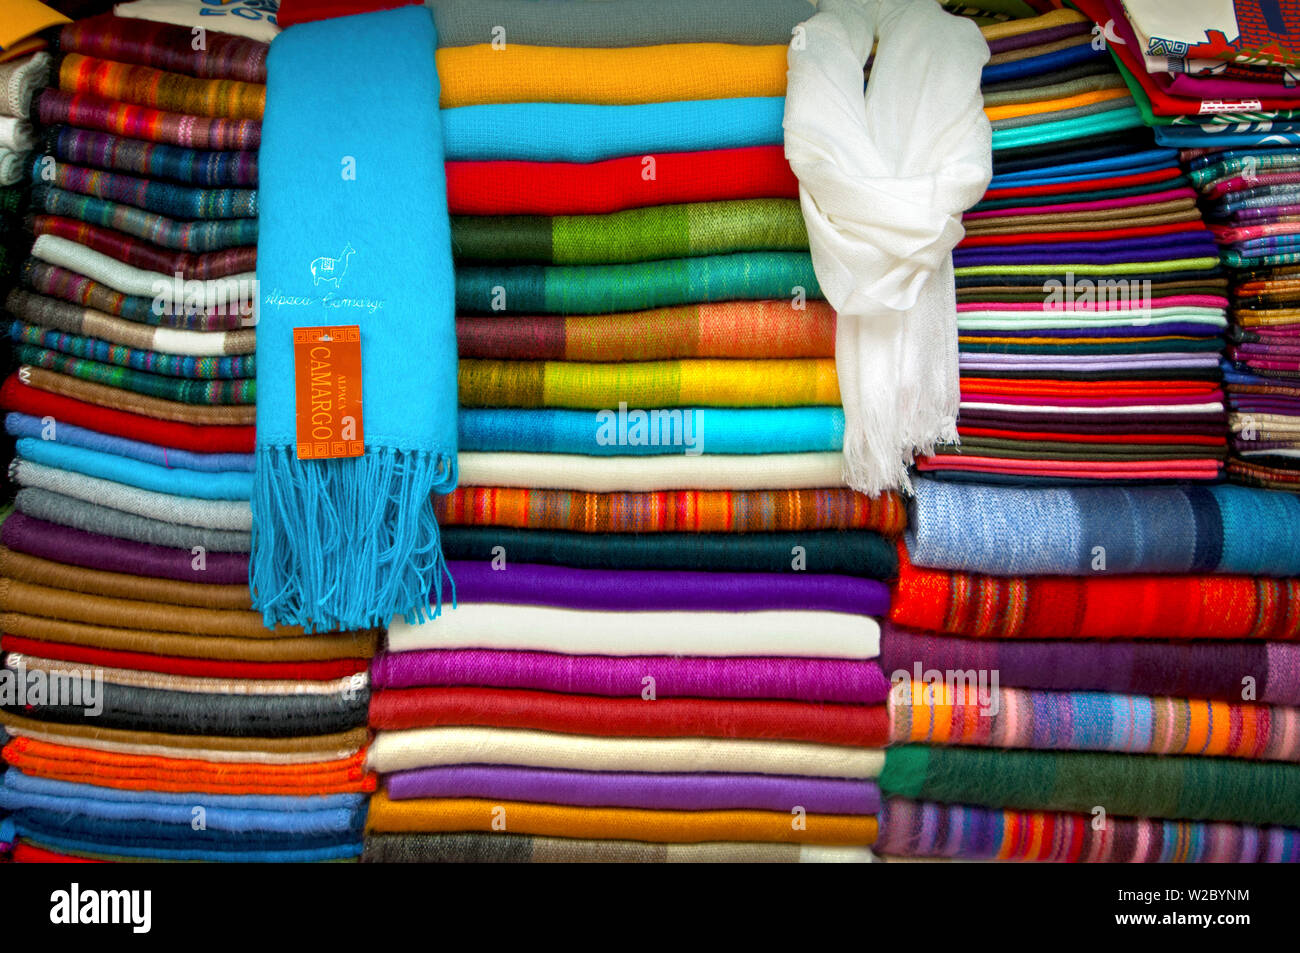 Hand Woven Alpaca Blankets And Shwals, For Sale At The Mercado Artesanal La Mariscal, Quito, Ecuador Stock Photo